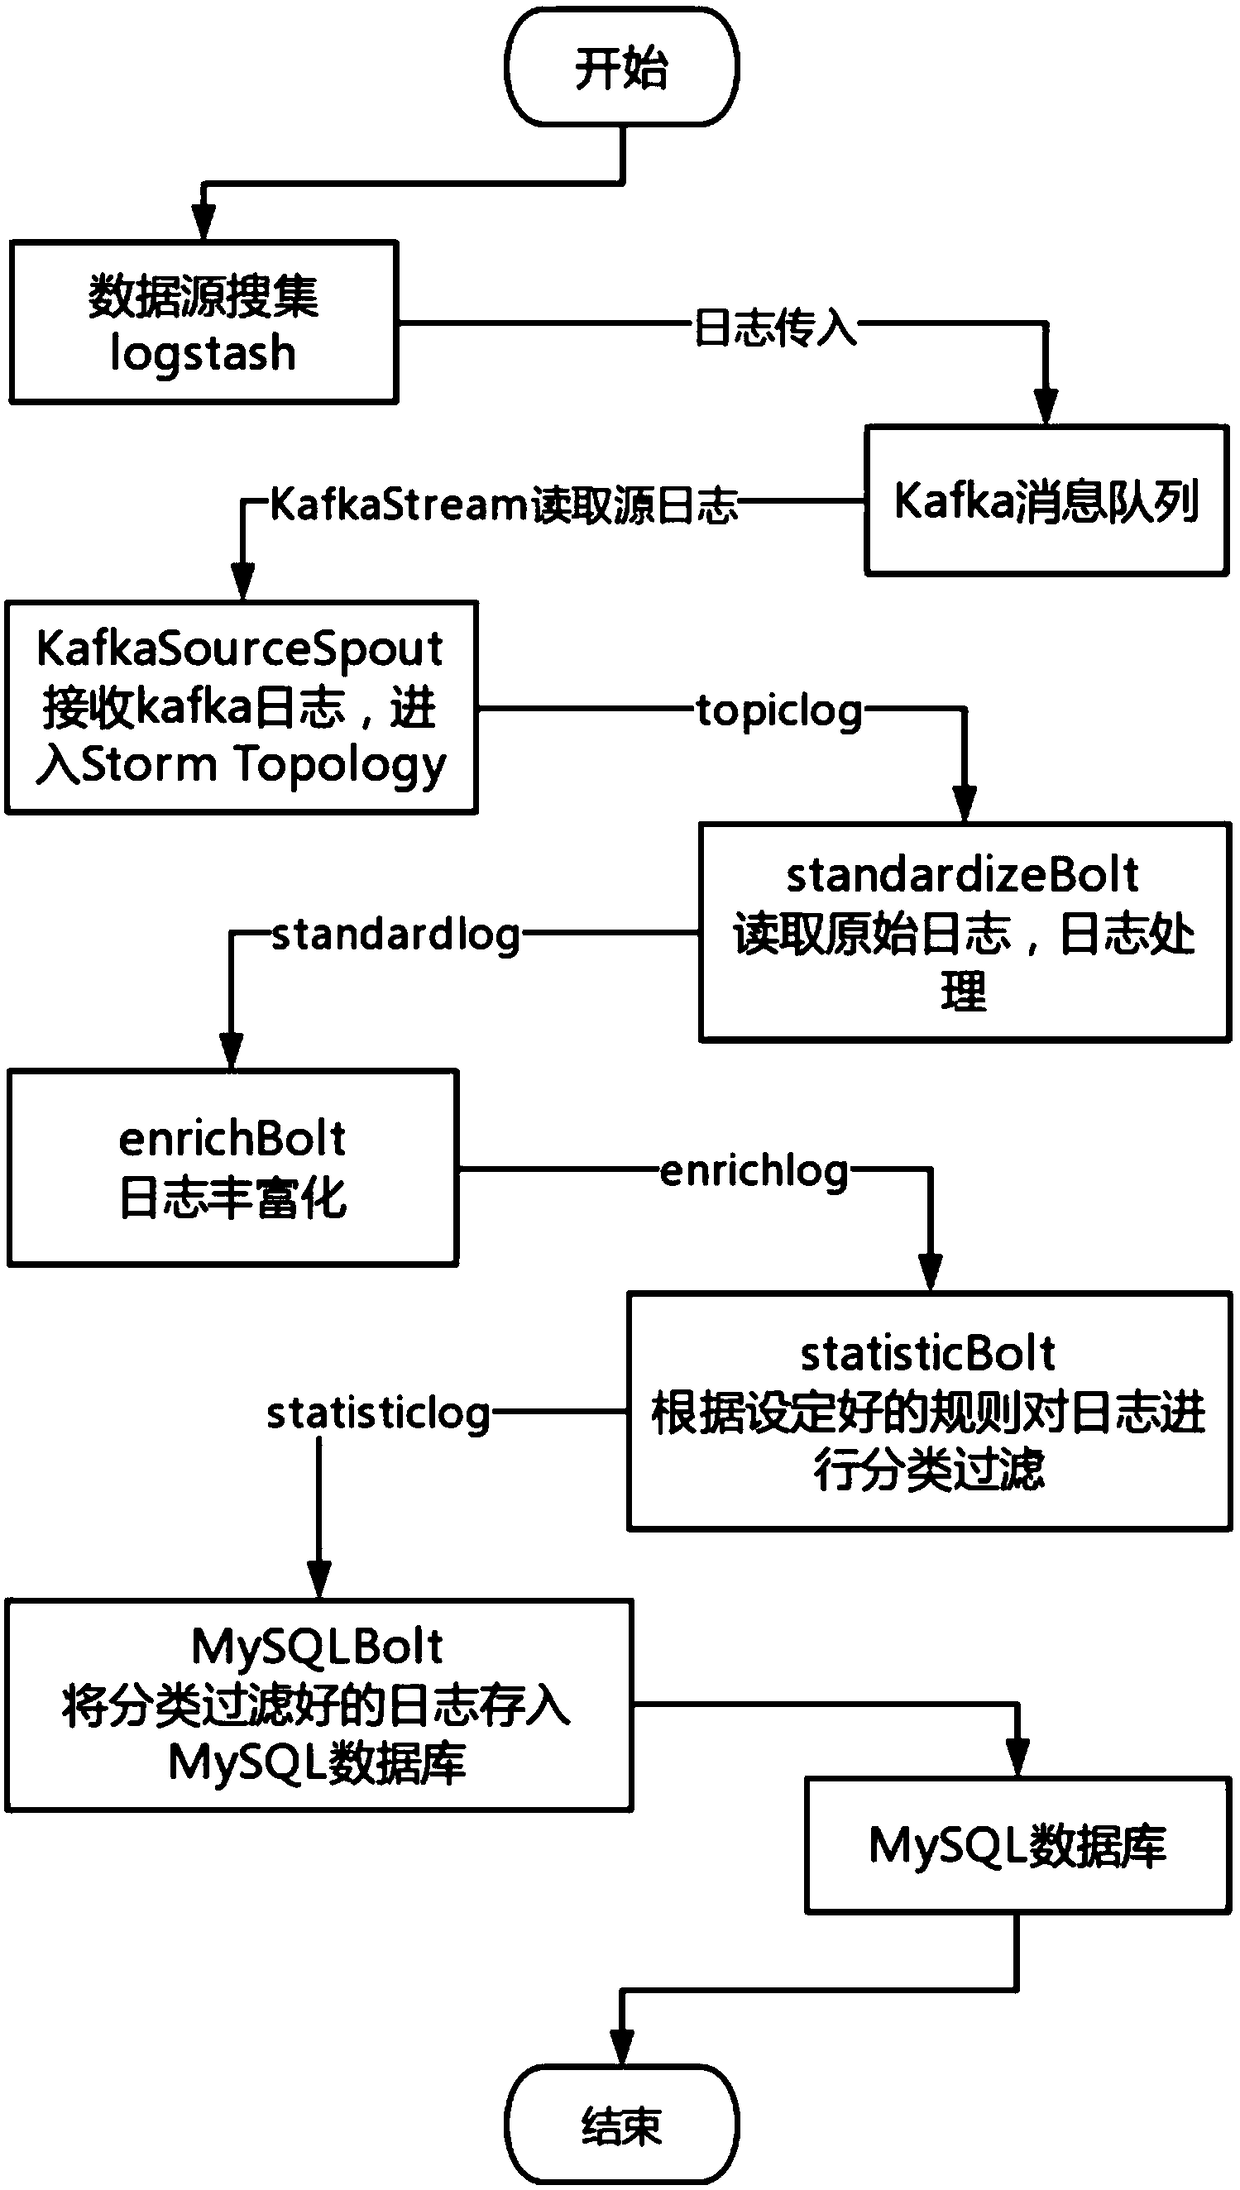 Web access log processing method based on storm